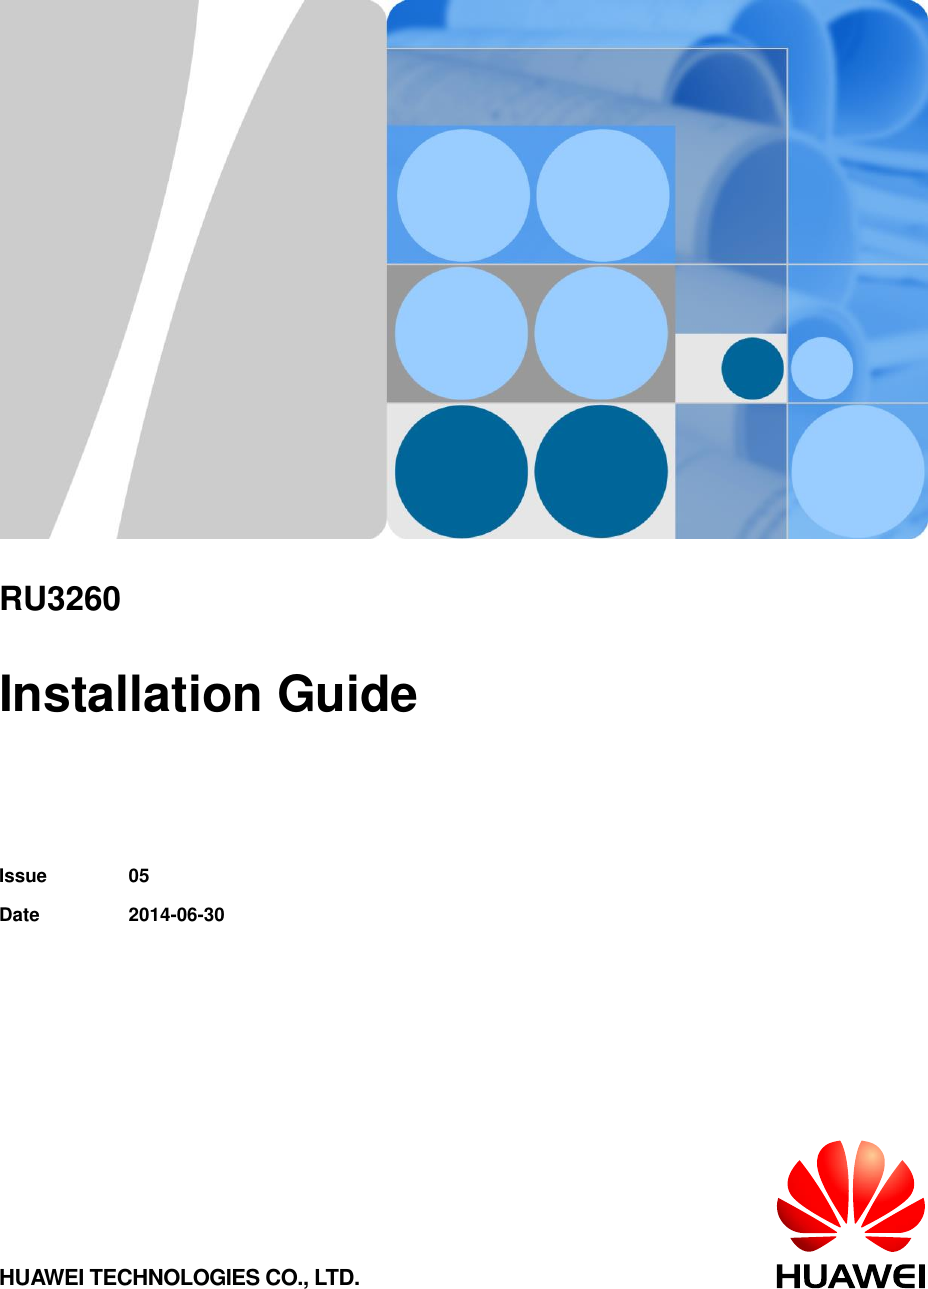           RU3260  Installation Guide   Issue 05 Date 2014-06-30 HUAWEI TECHNOLOGIES CO., LTD. 